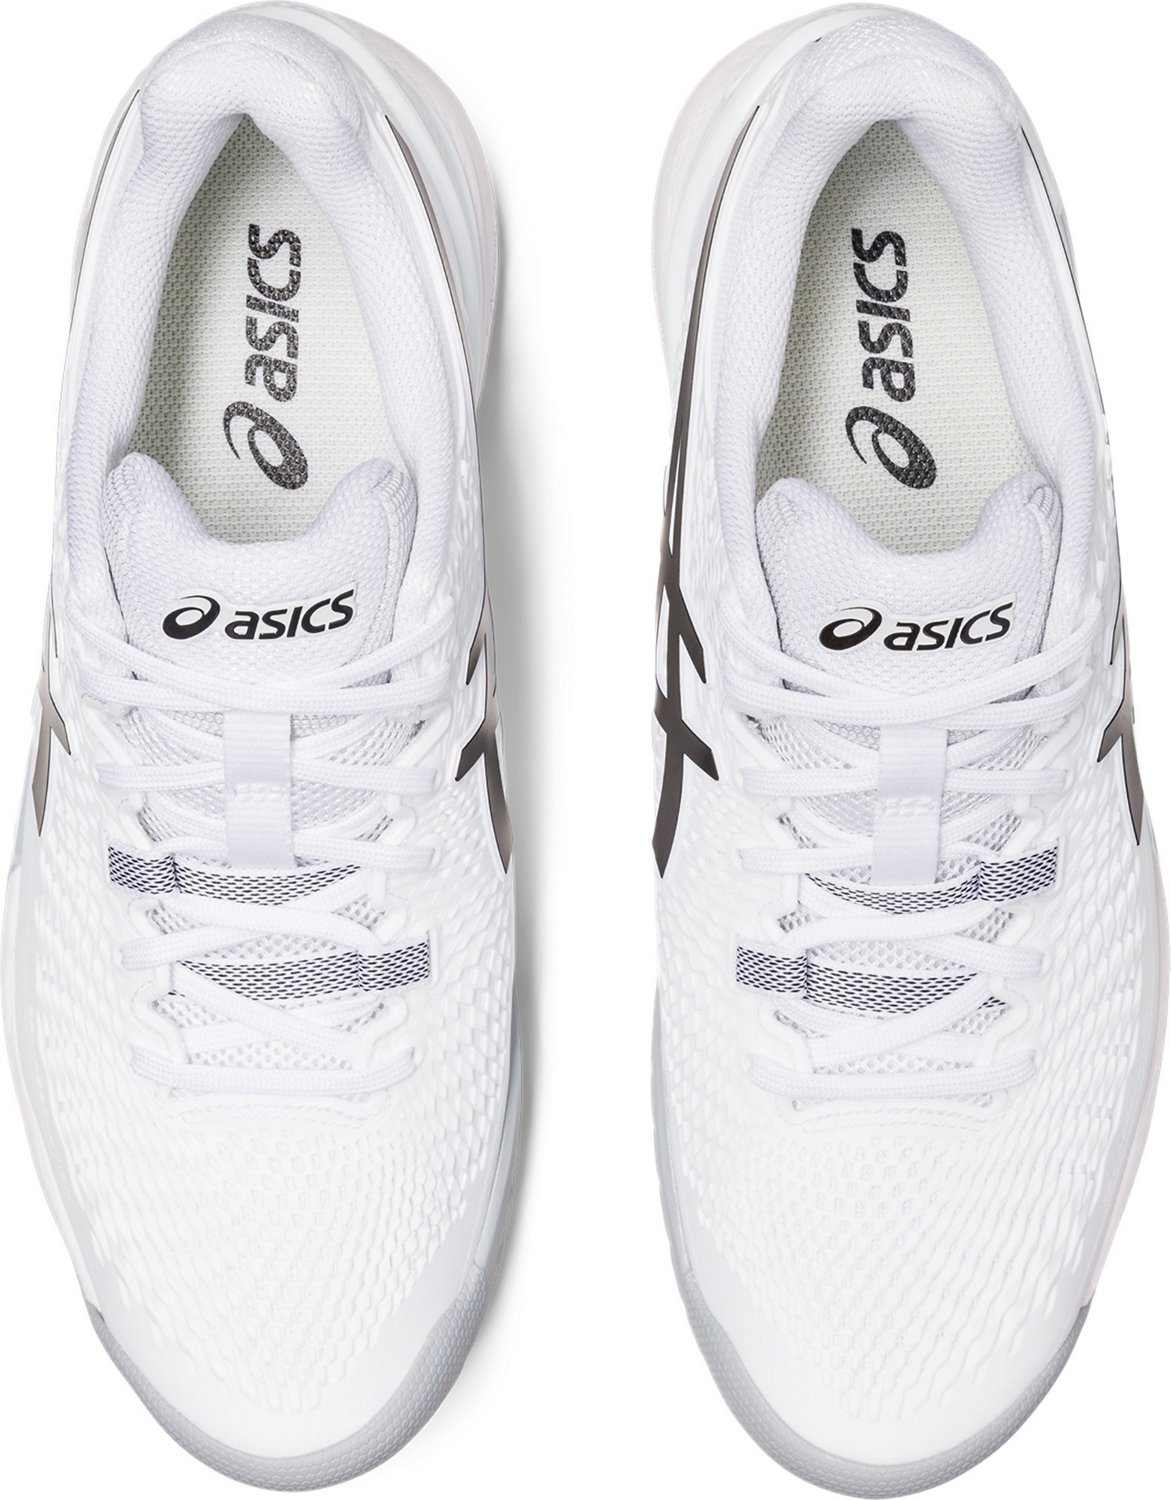 Asics Gel Resolution 9 Men's Tennis Shoe (Black/Blue)